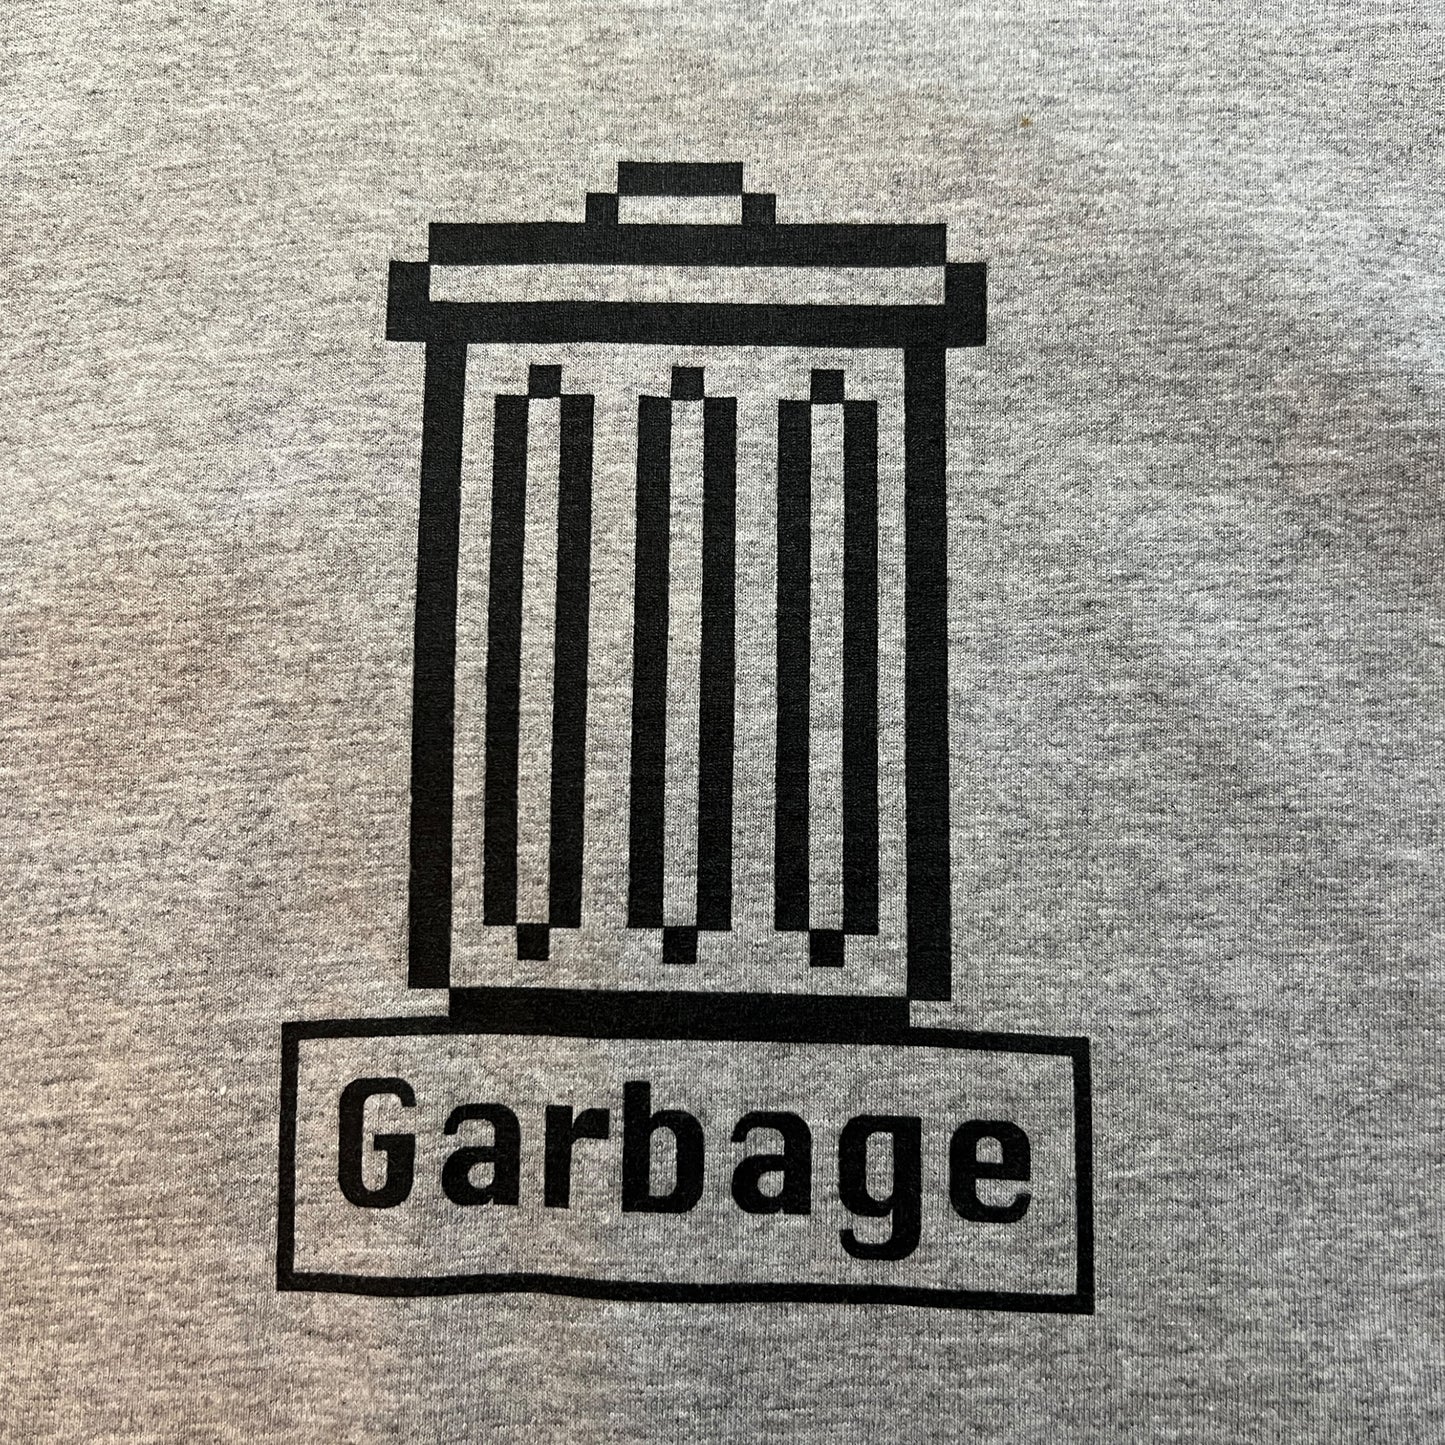 Garbage Band 90s Vintage T-Shirt Size L Signed By Butch Vig, Dan & Duke